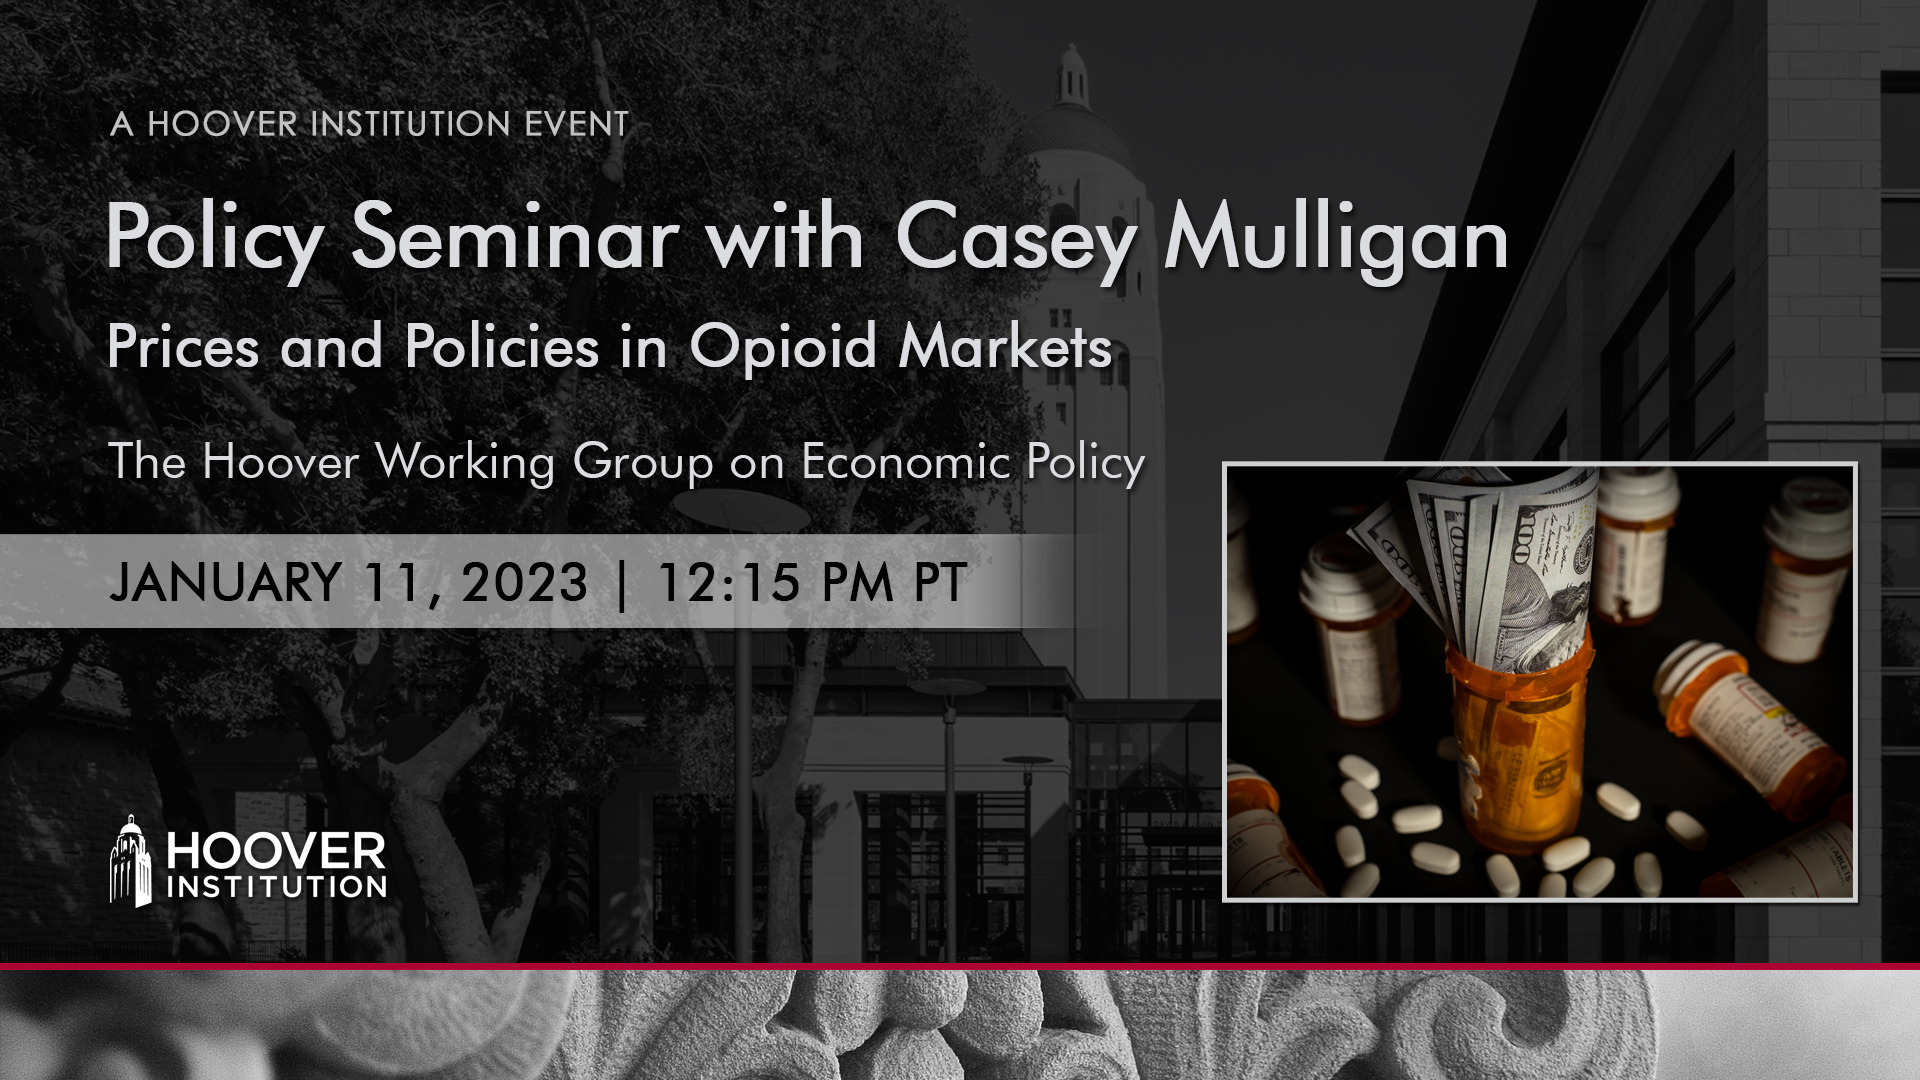 Policy Seminar with Casey Mulligan